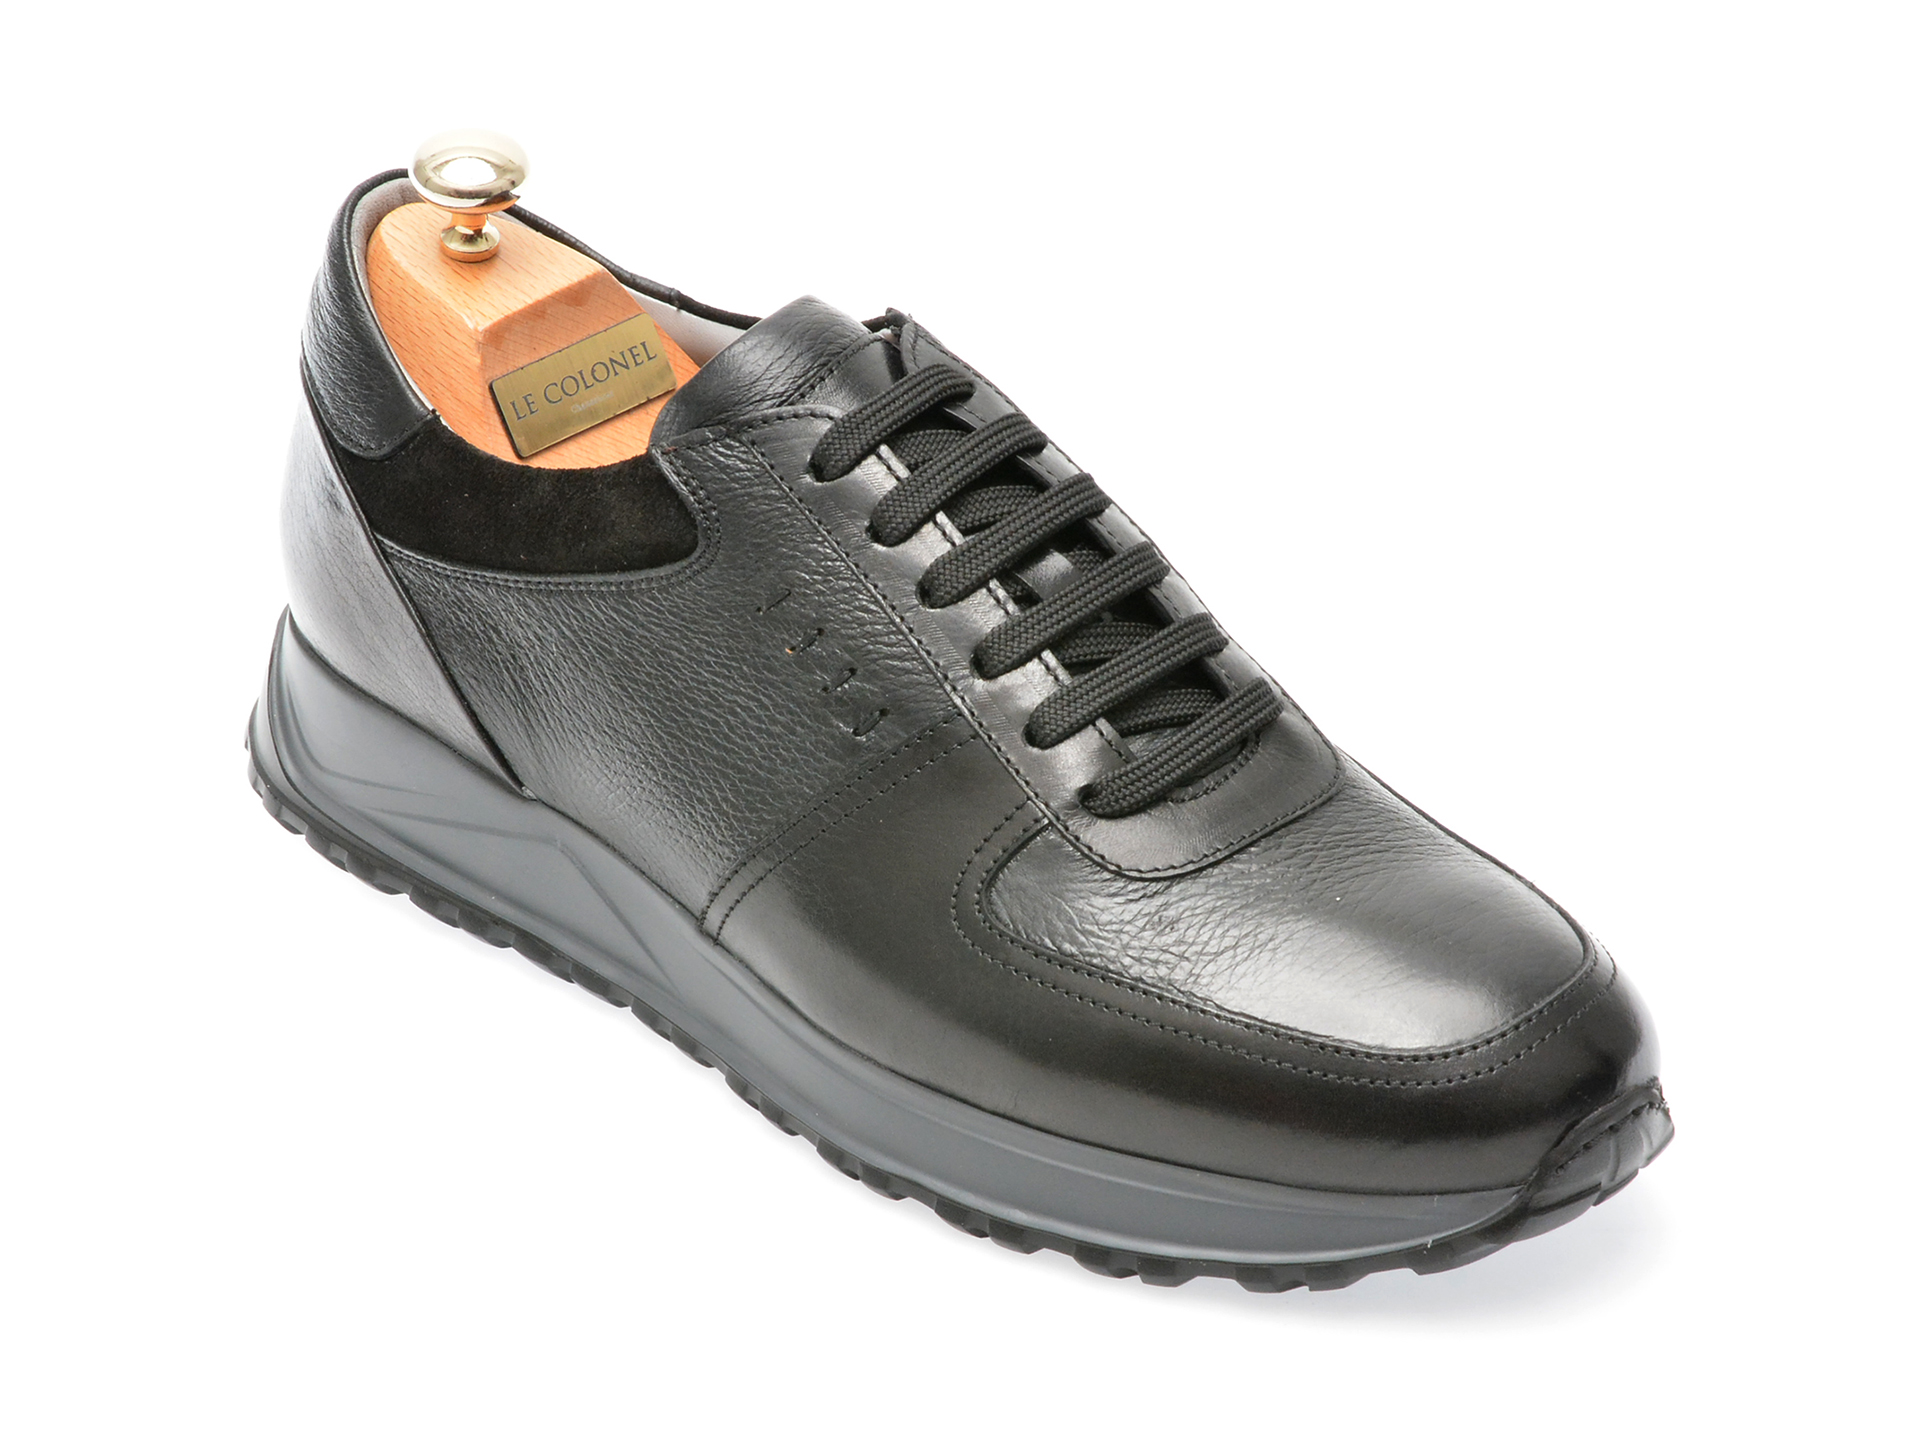 Pantofi LE COLONEL negri, 64318, din piele naturala /barbati/pantofi